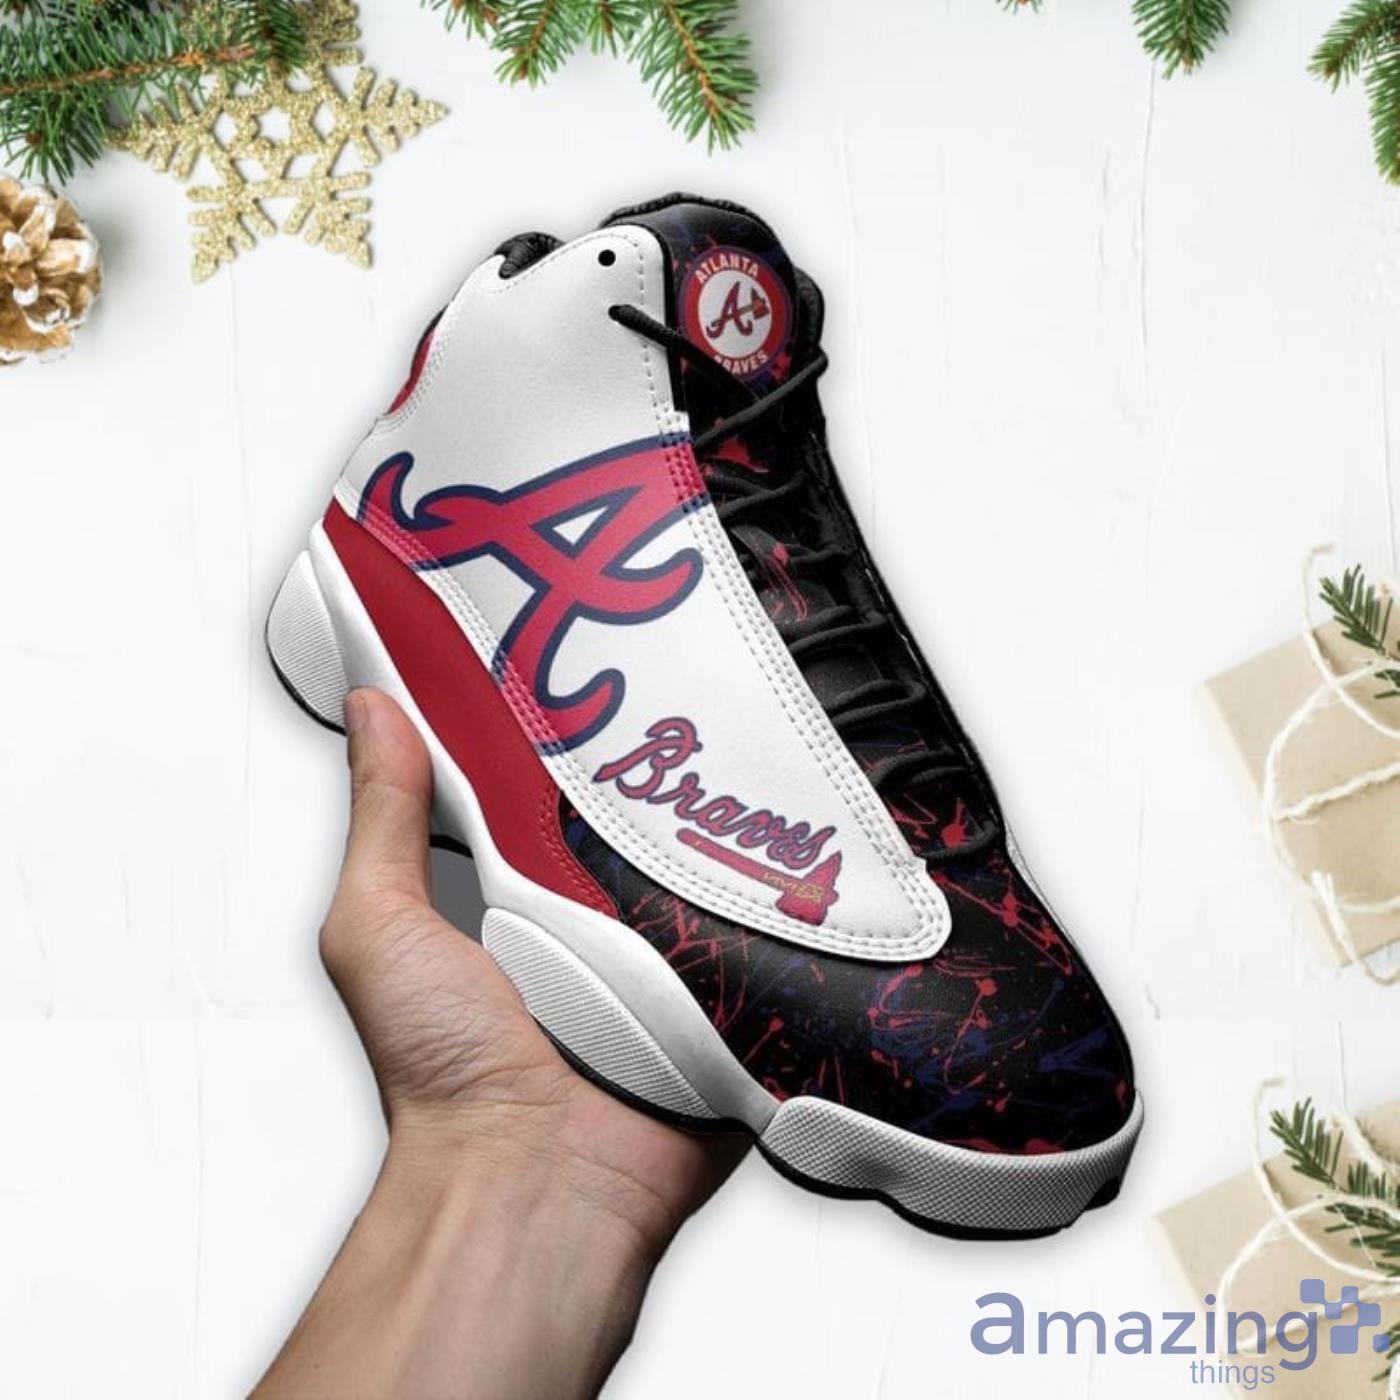 Formode matrix Inspirere Mlb Atlanta Braves Limited Edition Air Jordan 13 Shoes For Fans